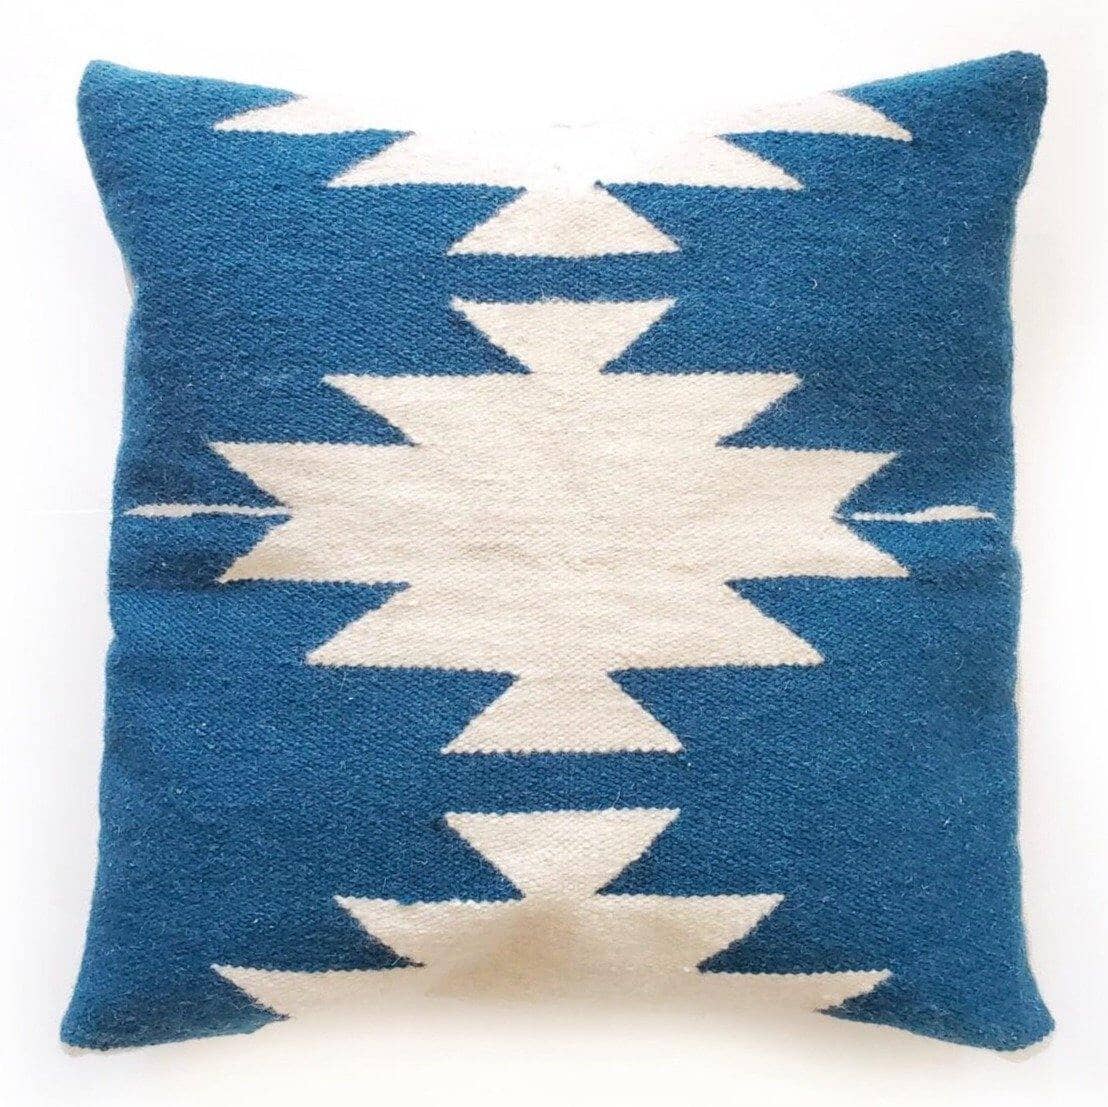 Handwoven decorative wool pillows